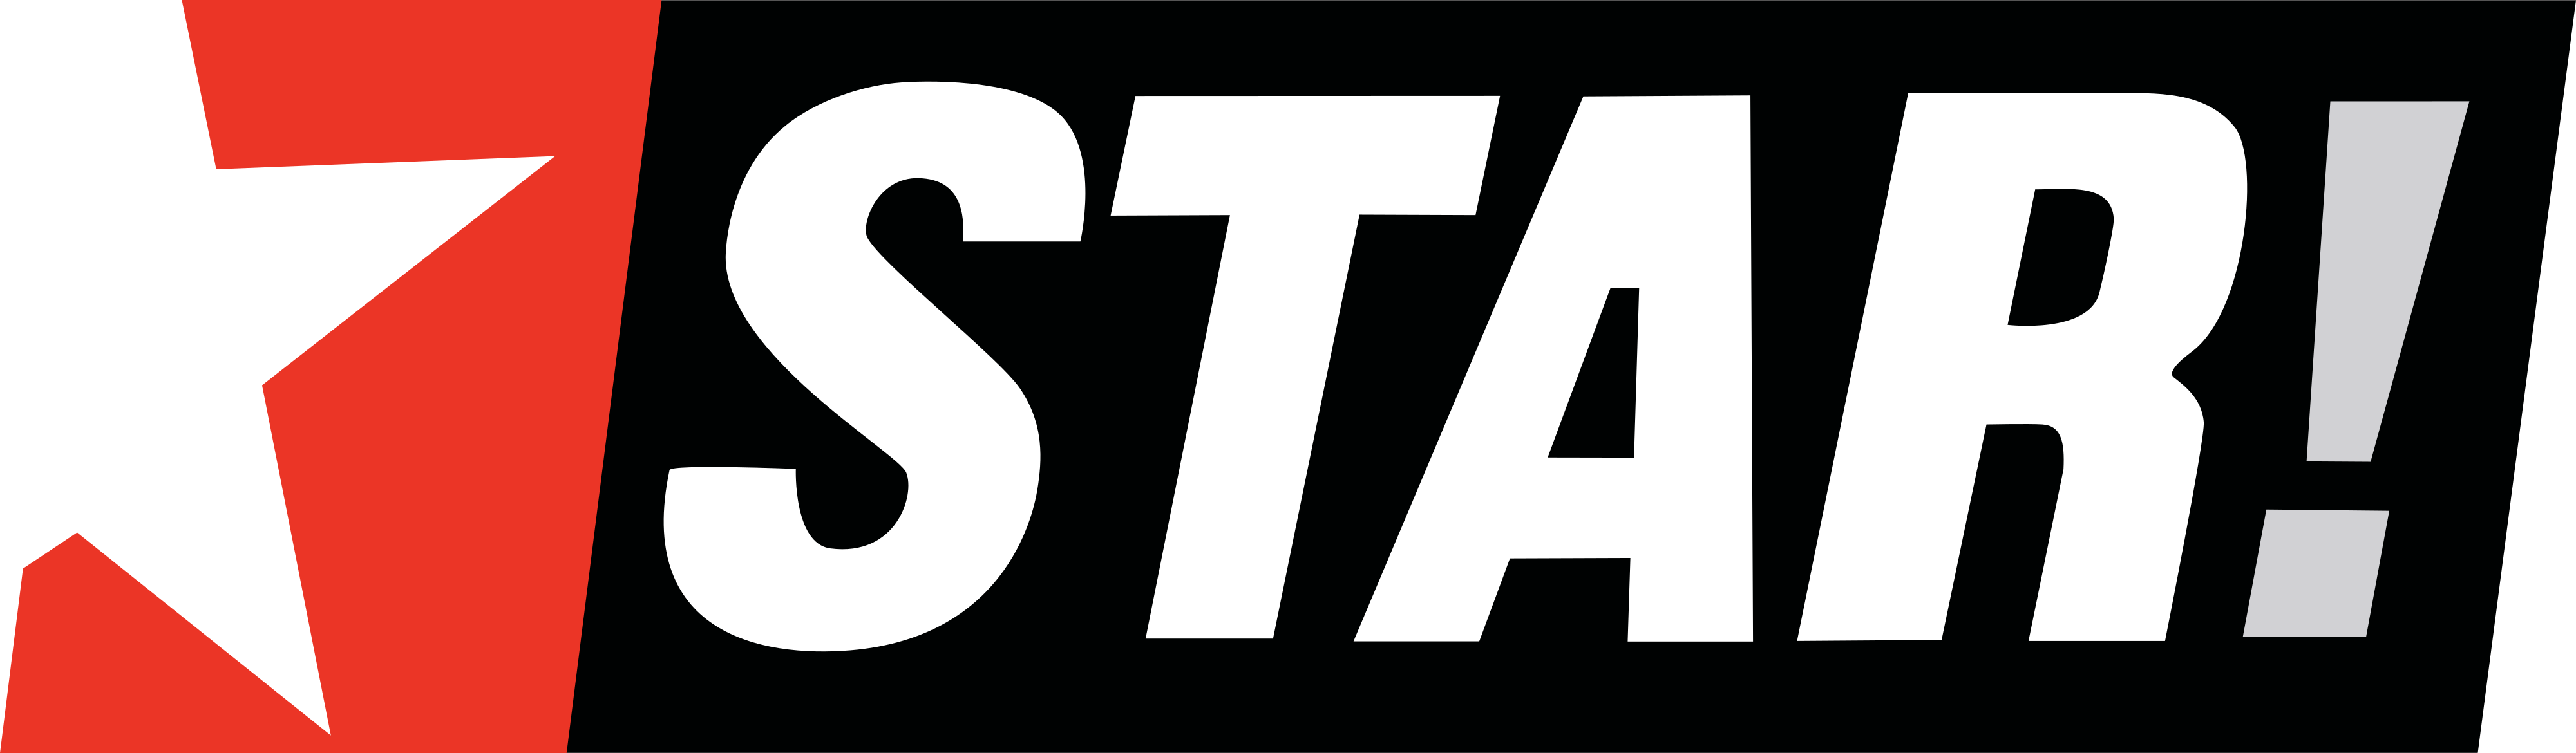 Star TV logo - download.